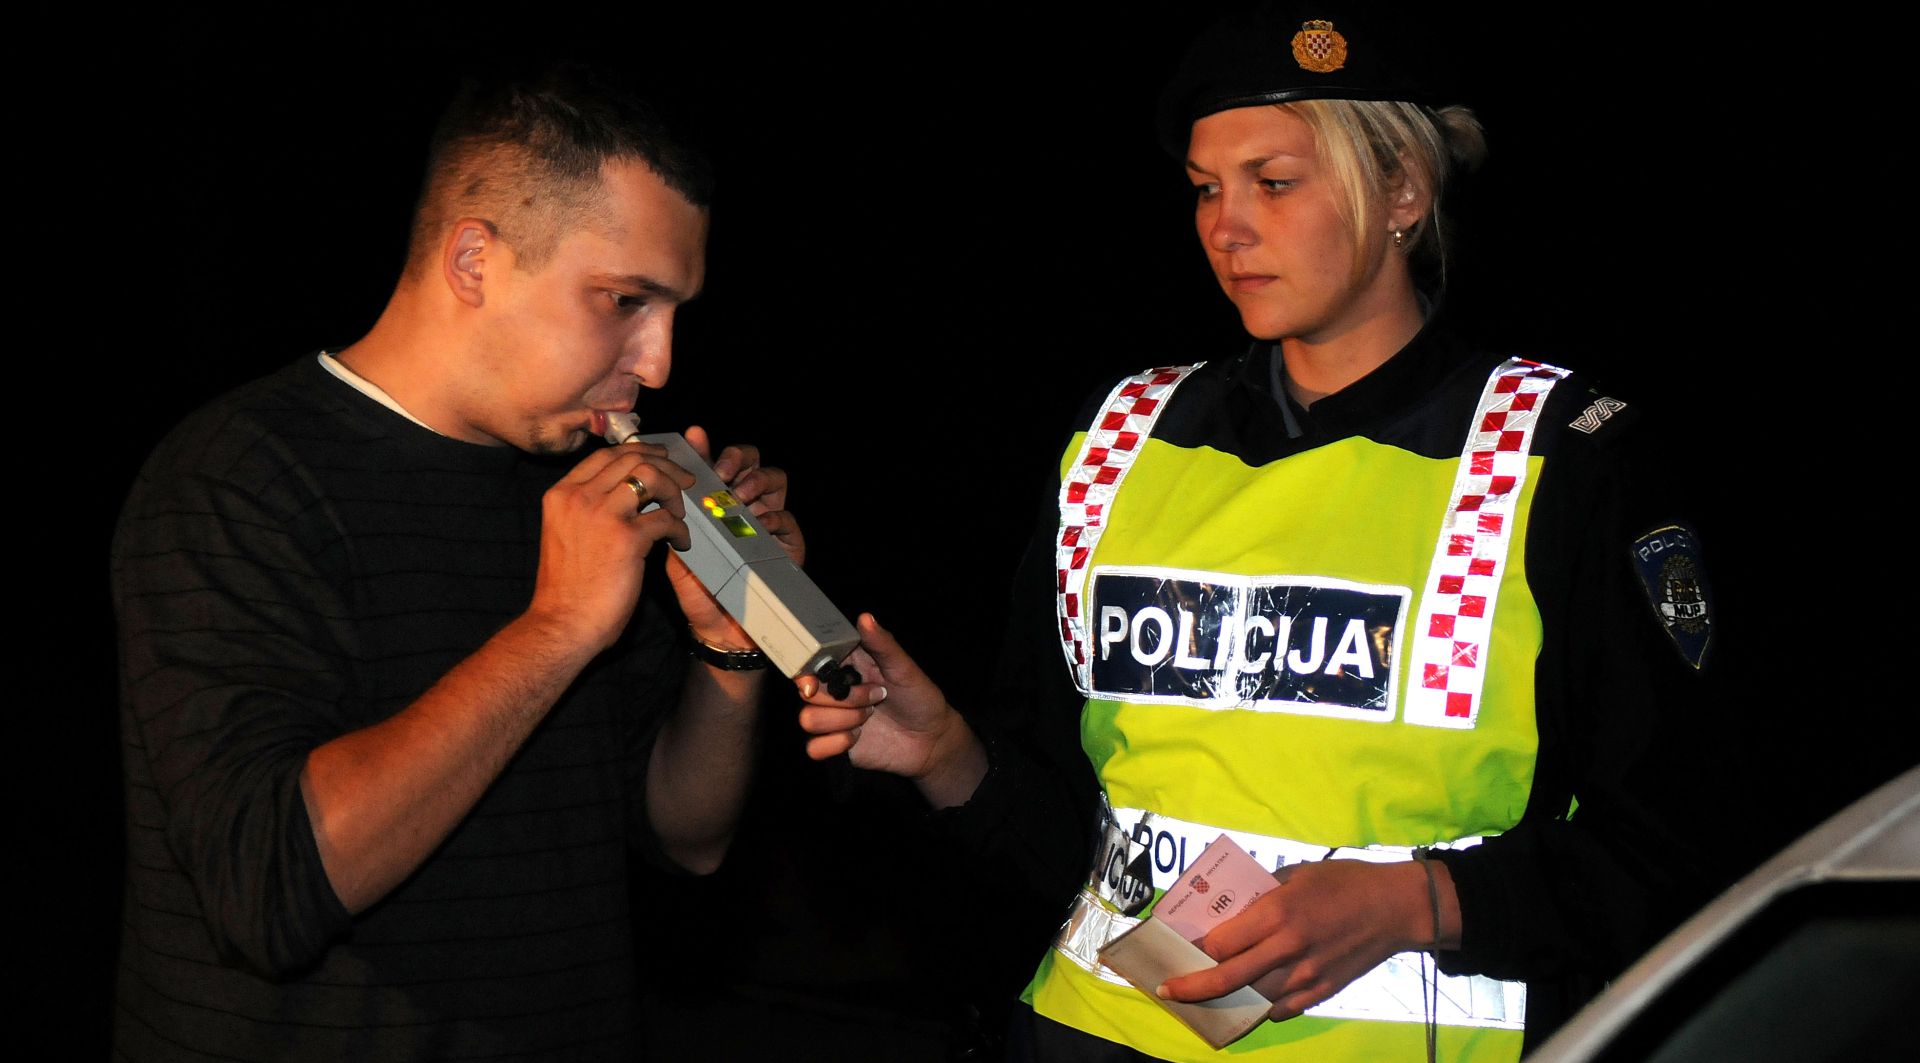 27.06.2010., Zagreb, Hrvatska - Velika policijska akcija, testiranje vozaca na alkohol i drogu.
Photo: Anto Magzan/PIXSELL